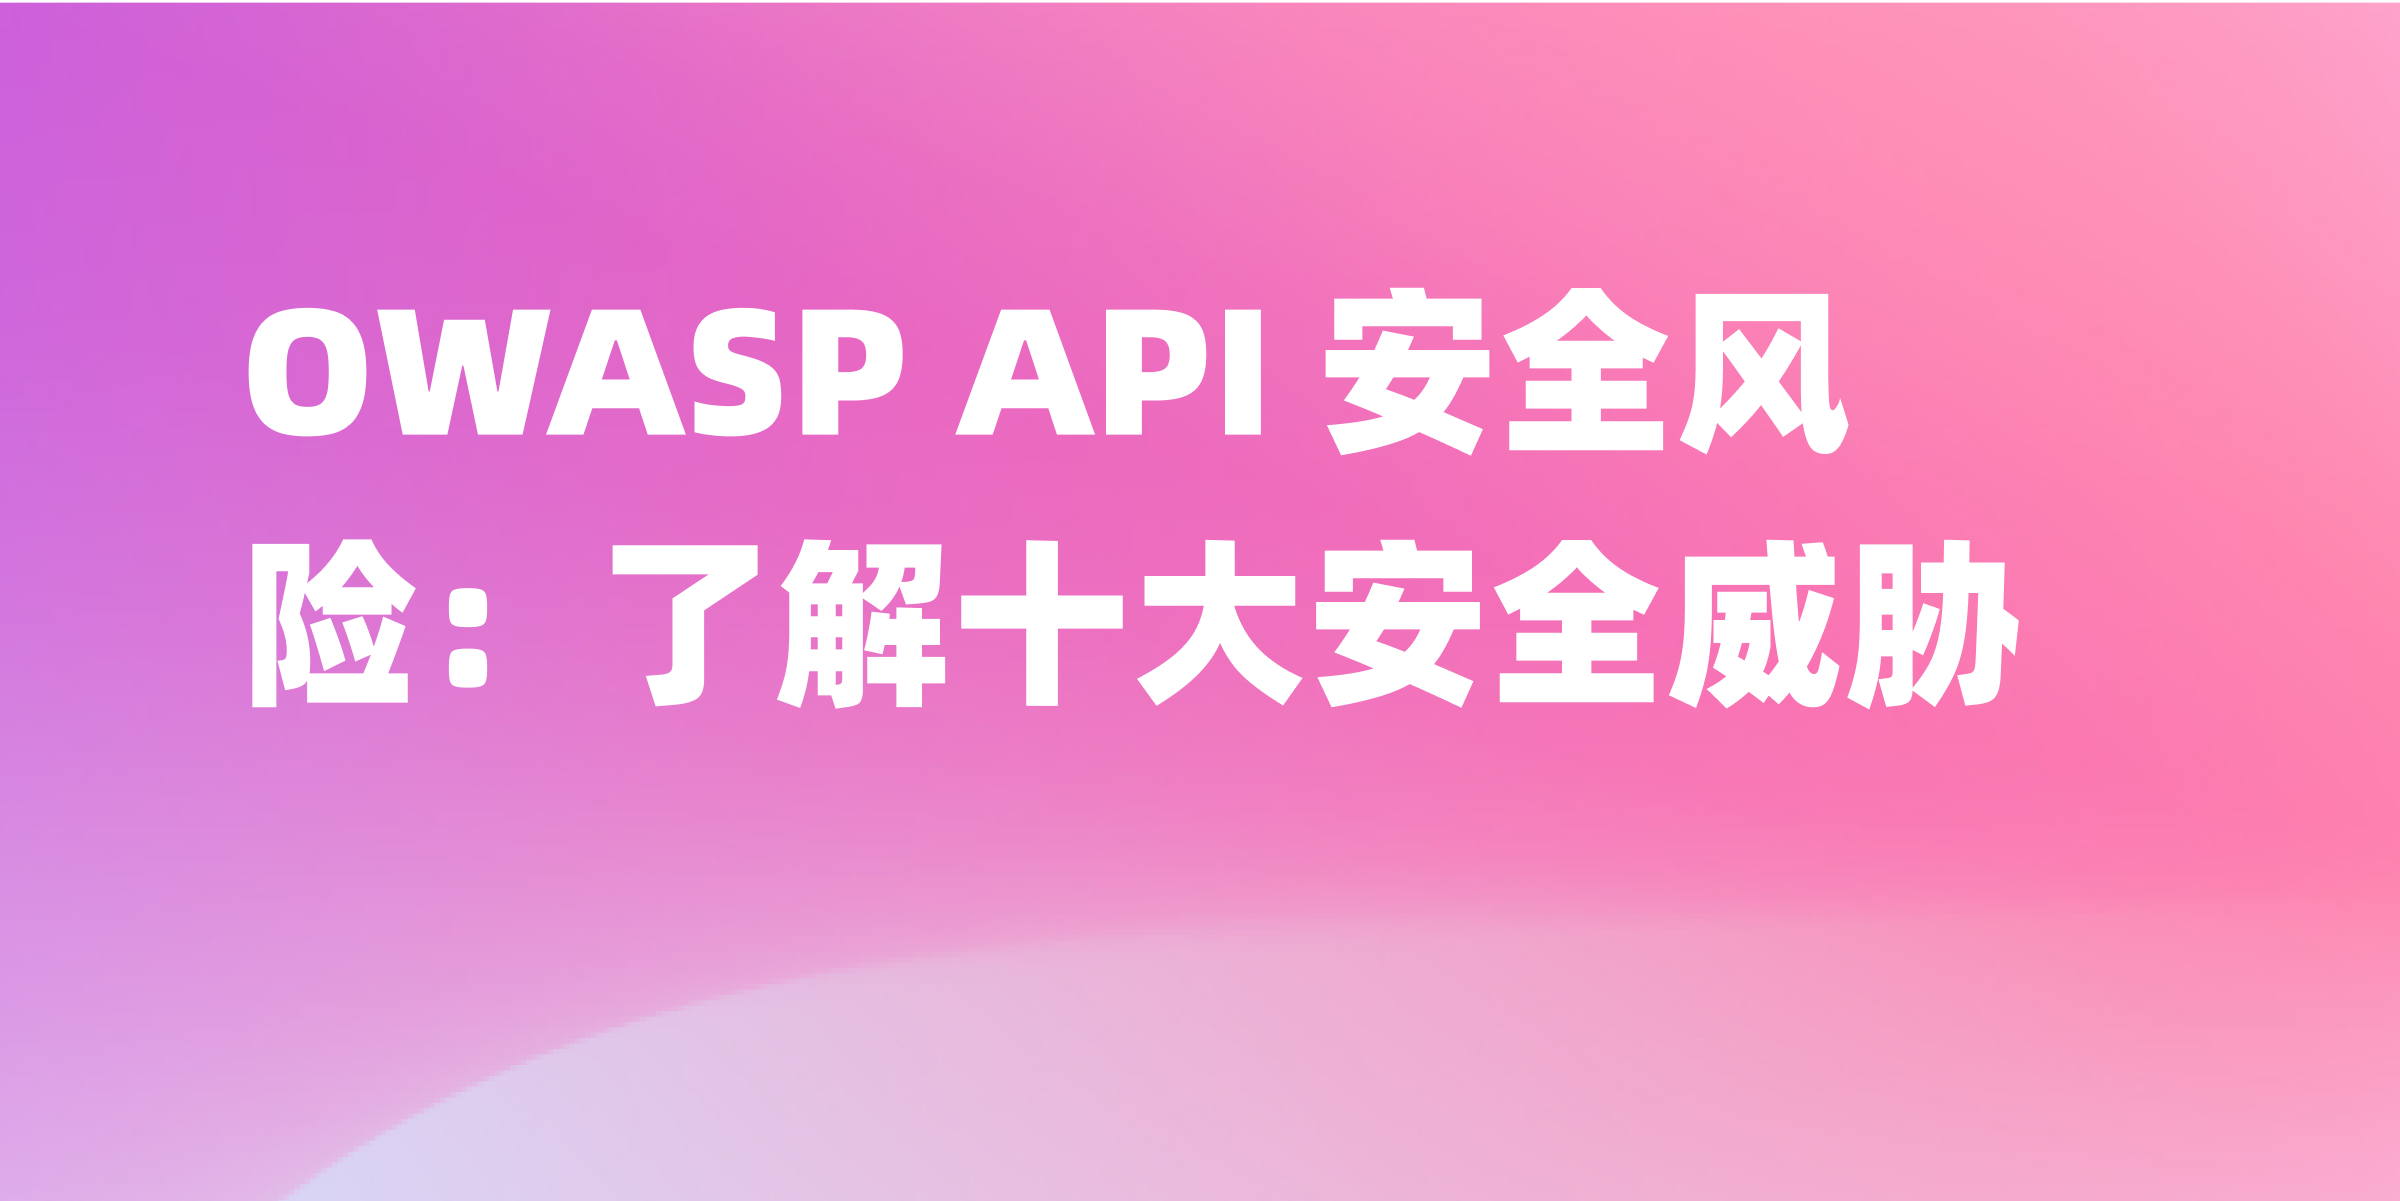 了解 OWASP API 安全风险:  OWASP API 10 大风险详解